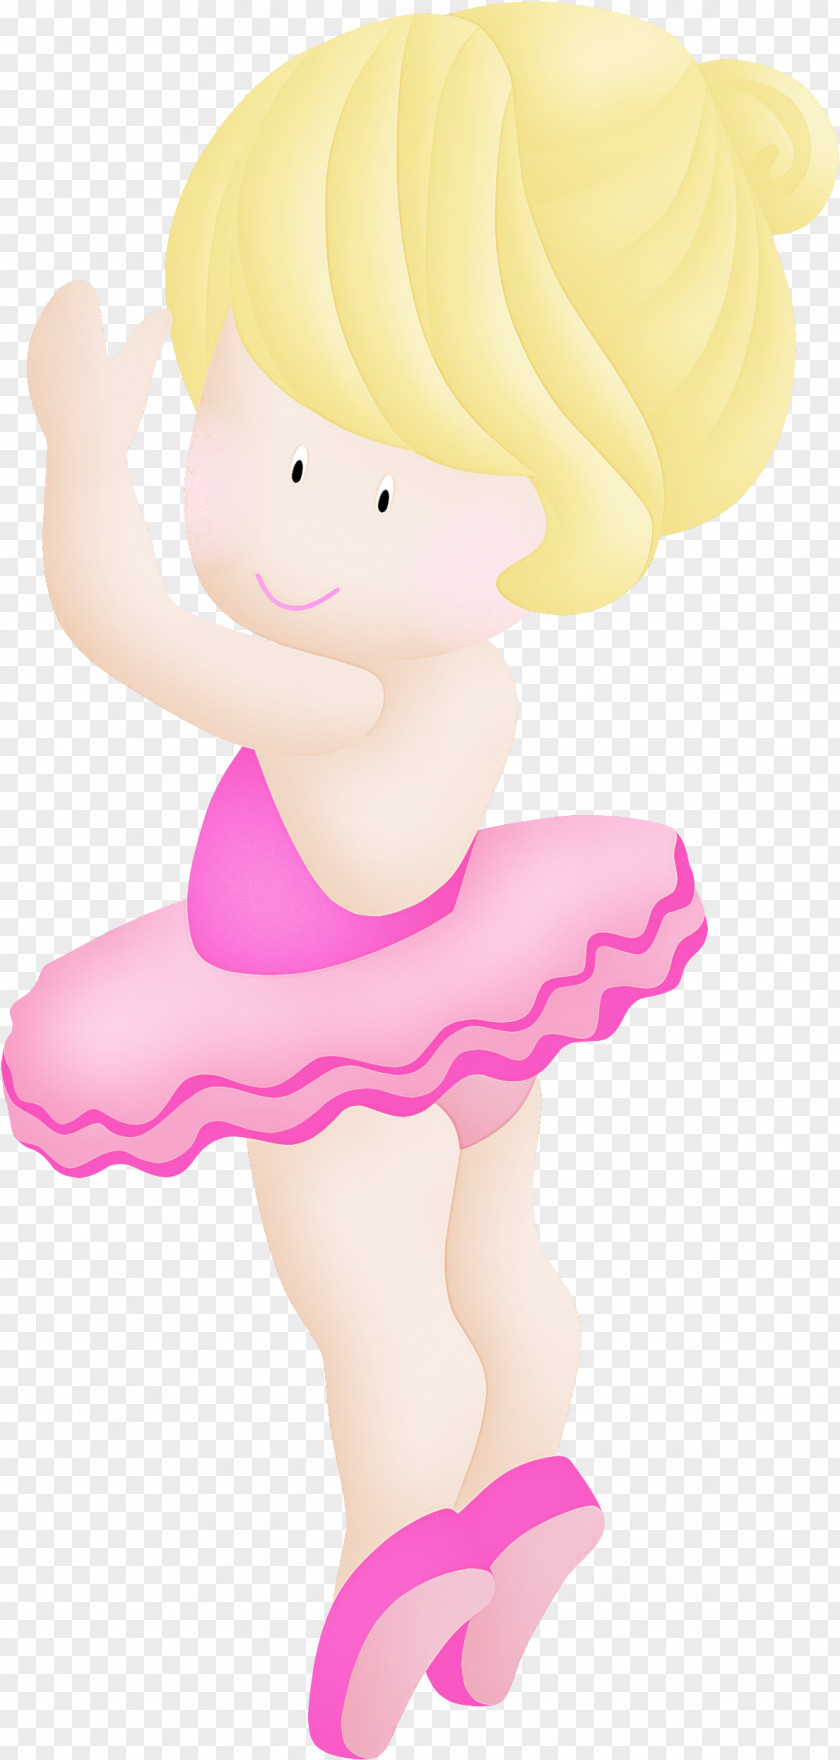 Cartoon Pink Figurine Costume Animation PNG